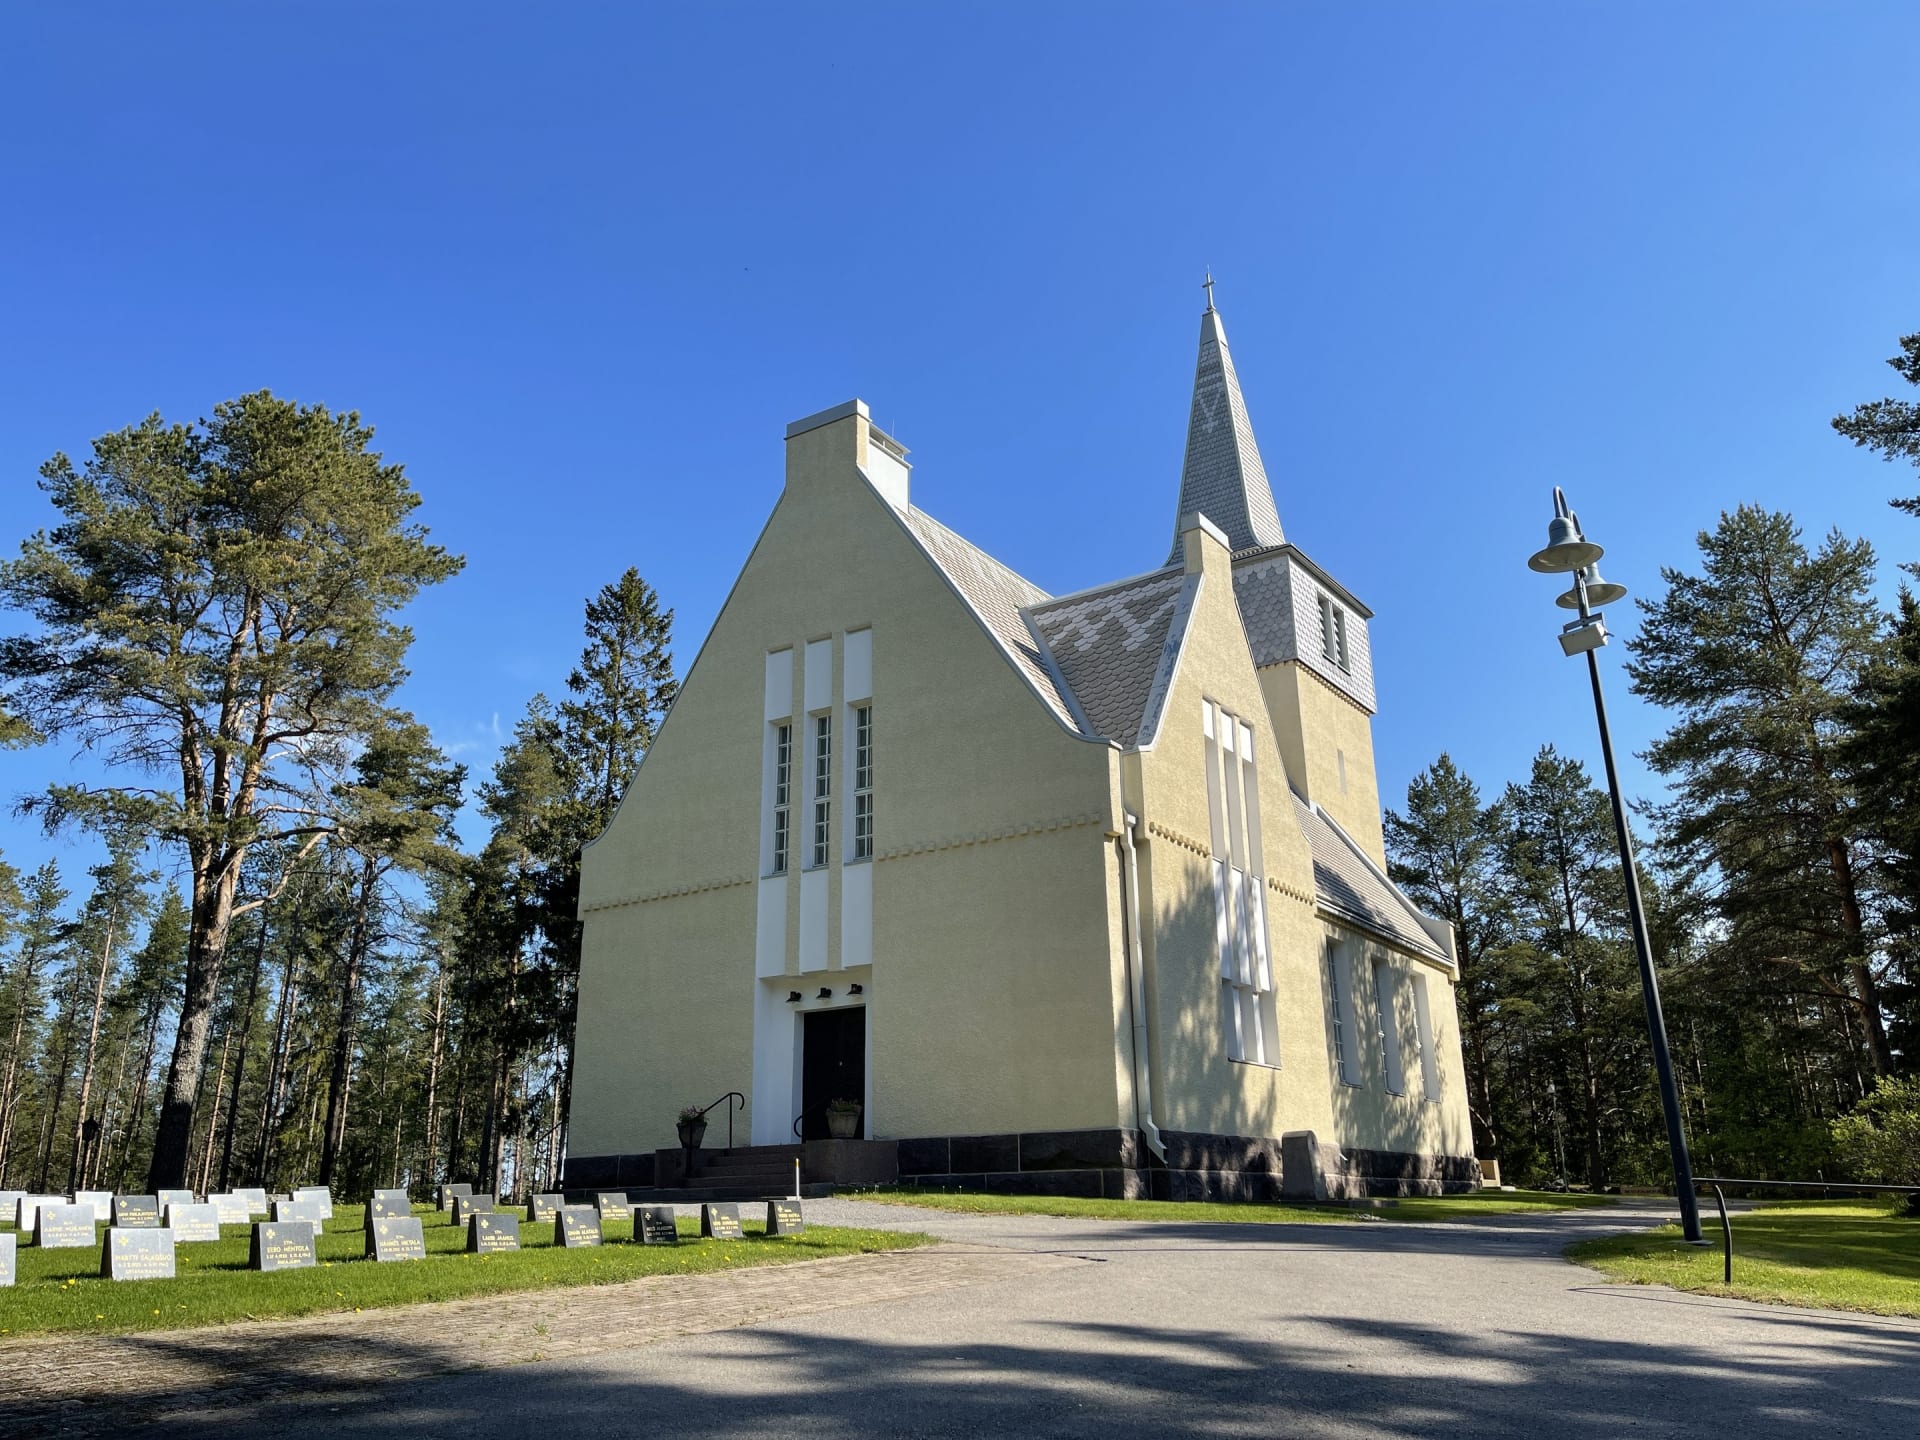 Pattijoki church and church yard.